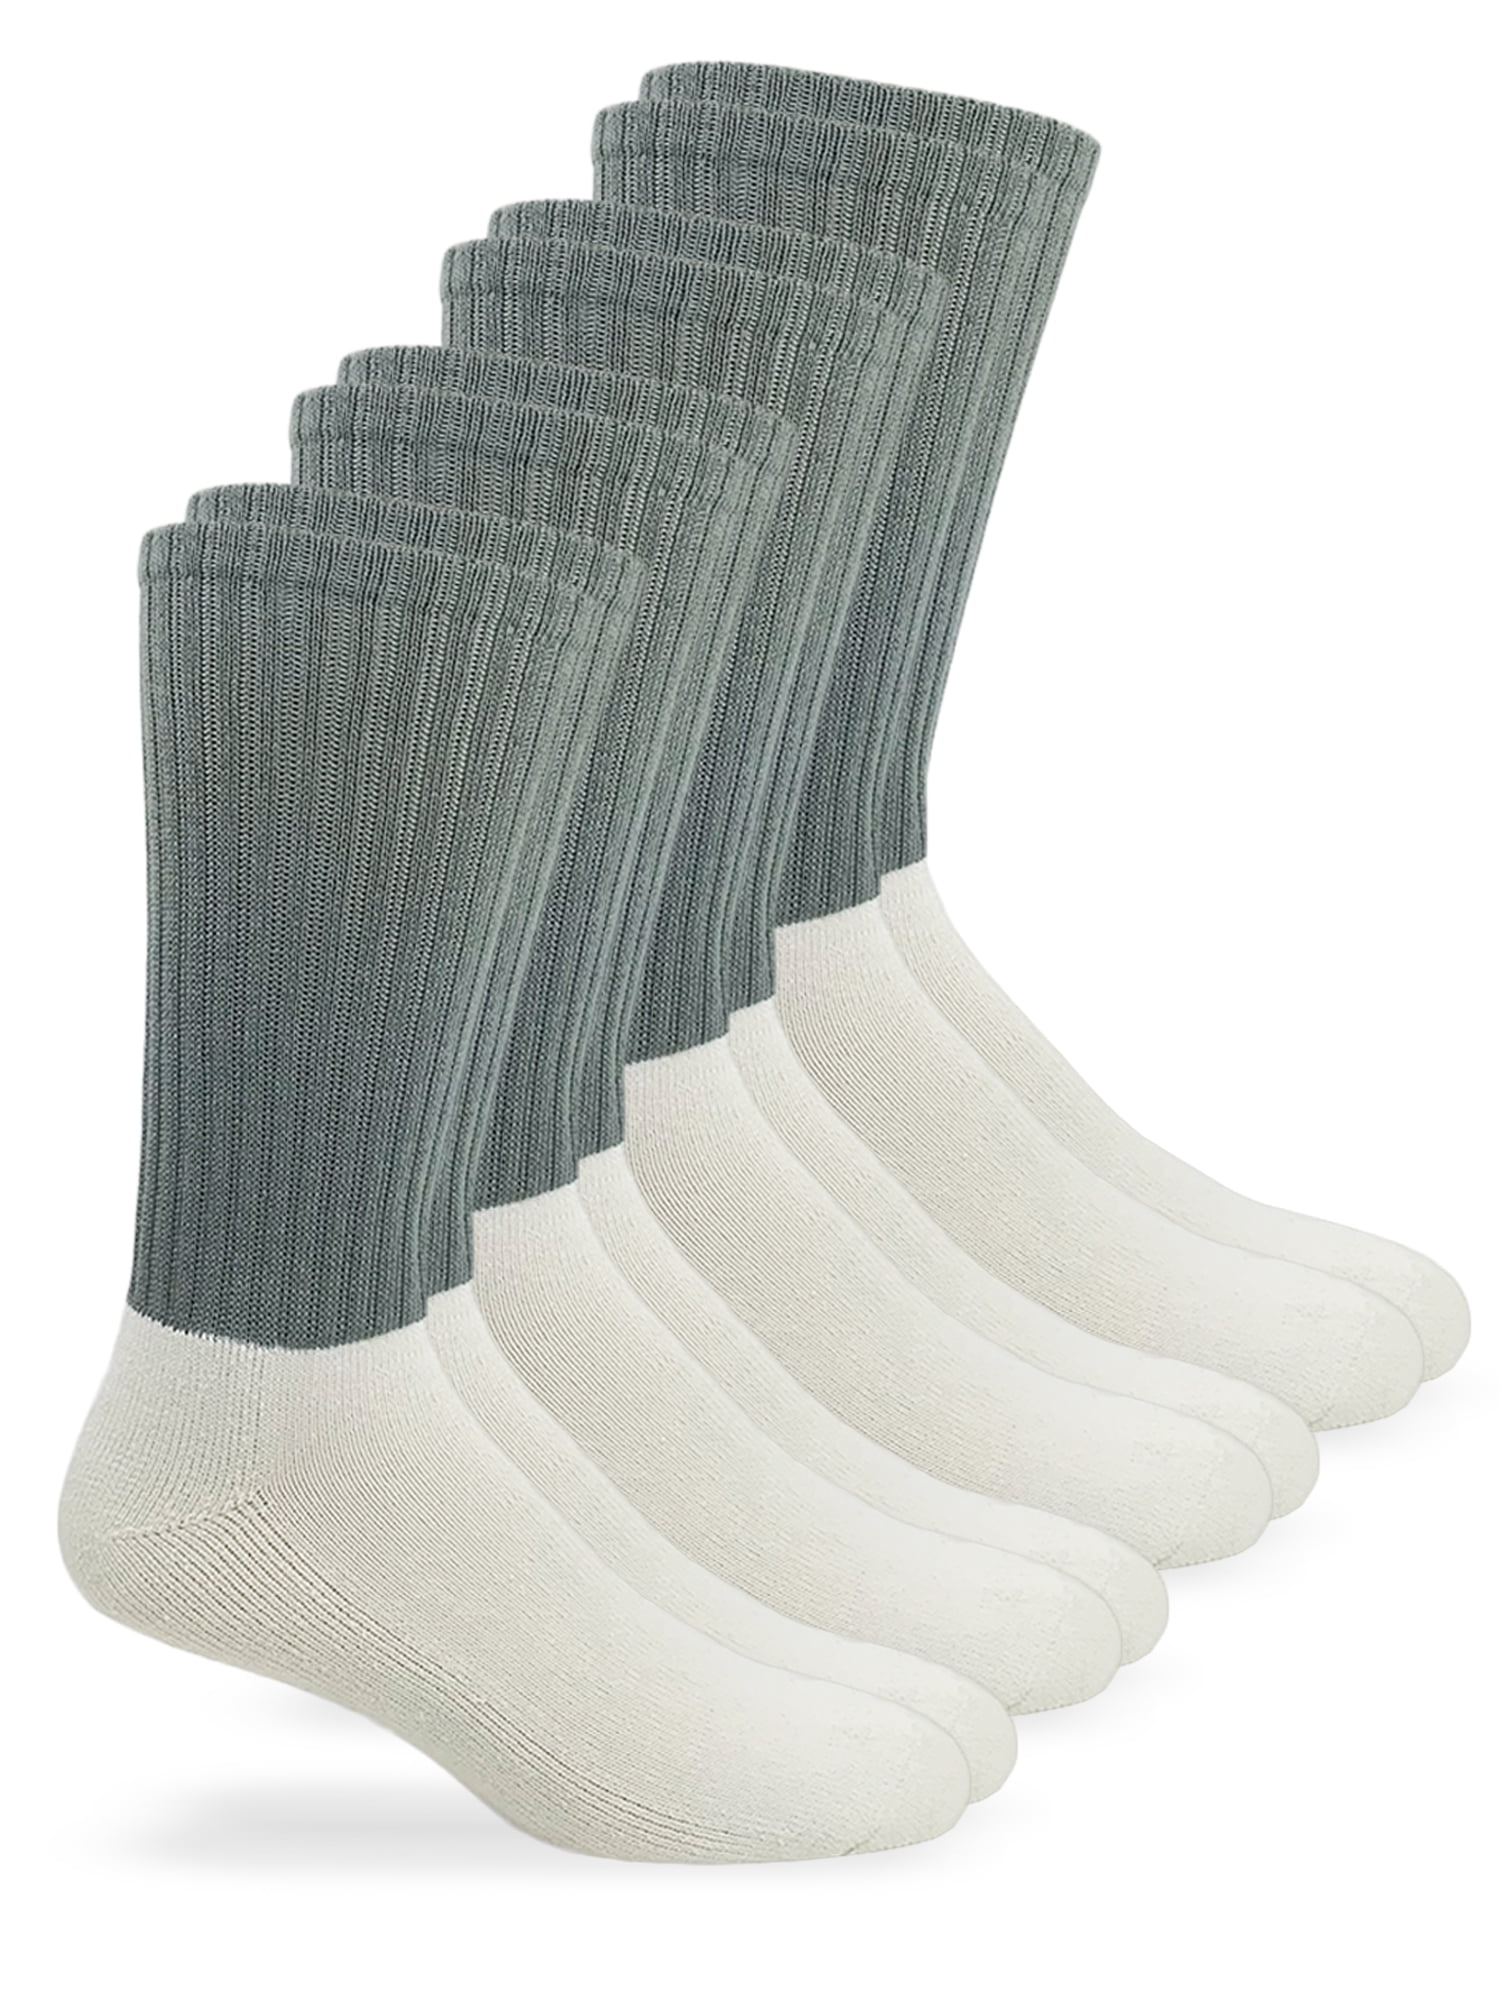 Kids Winter Ski Long Socks Boys Girls Welly Sport Antibacterial Grey 2 sizes 